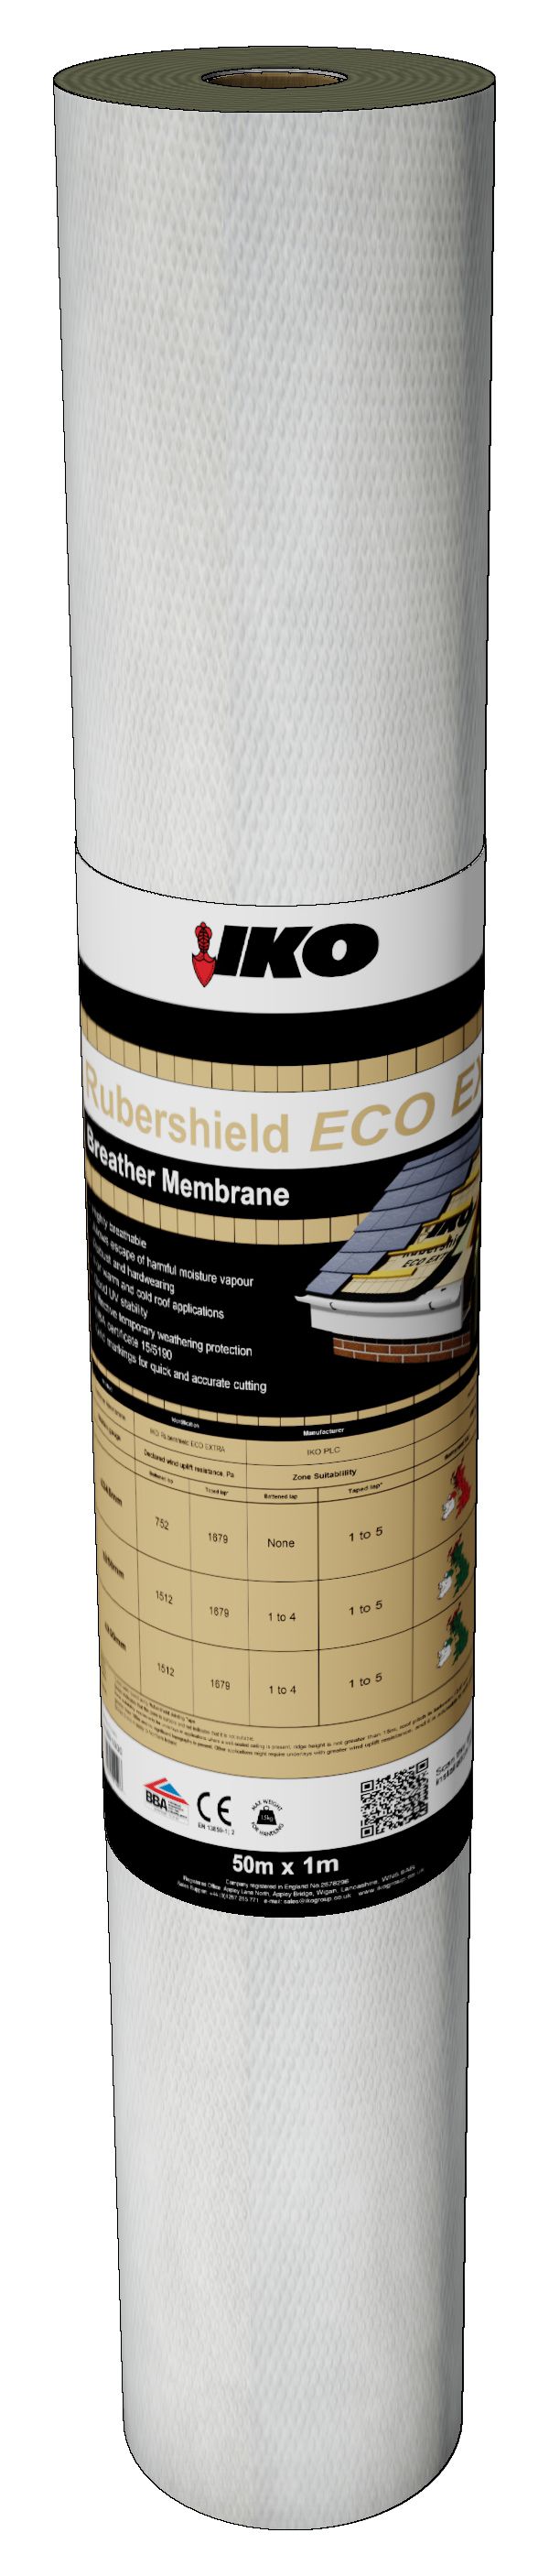 IKO Rubershield Eco Extra 120g/sqm Breather Membrane - 50 x 1m